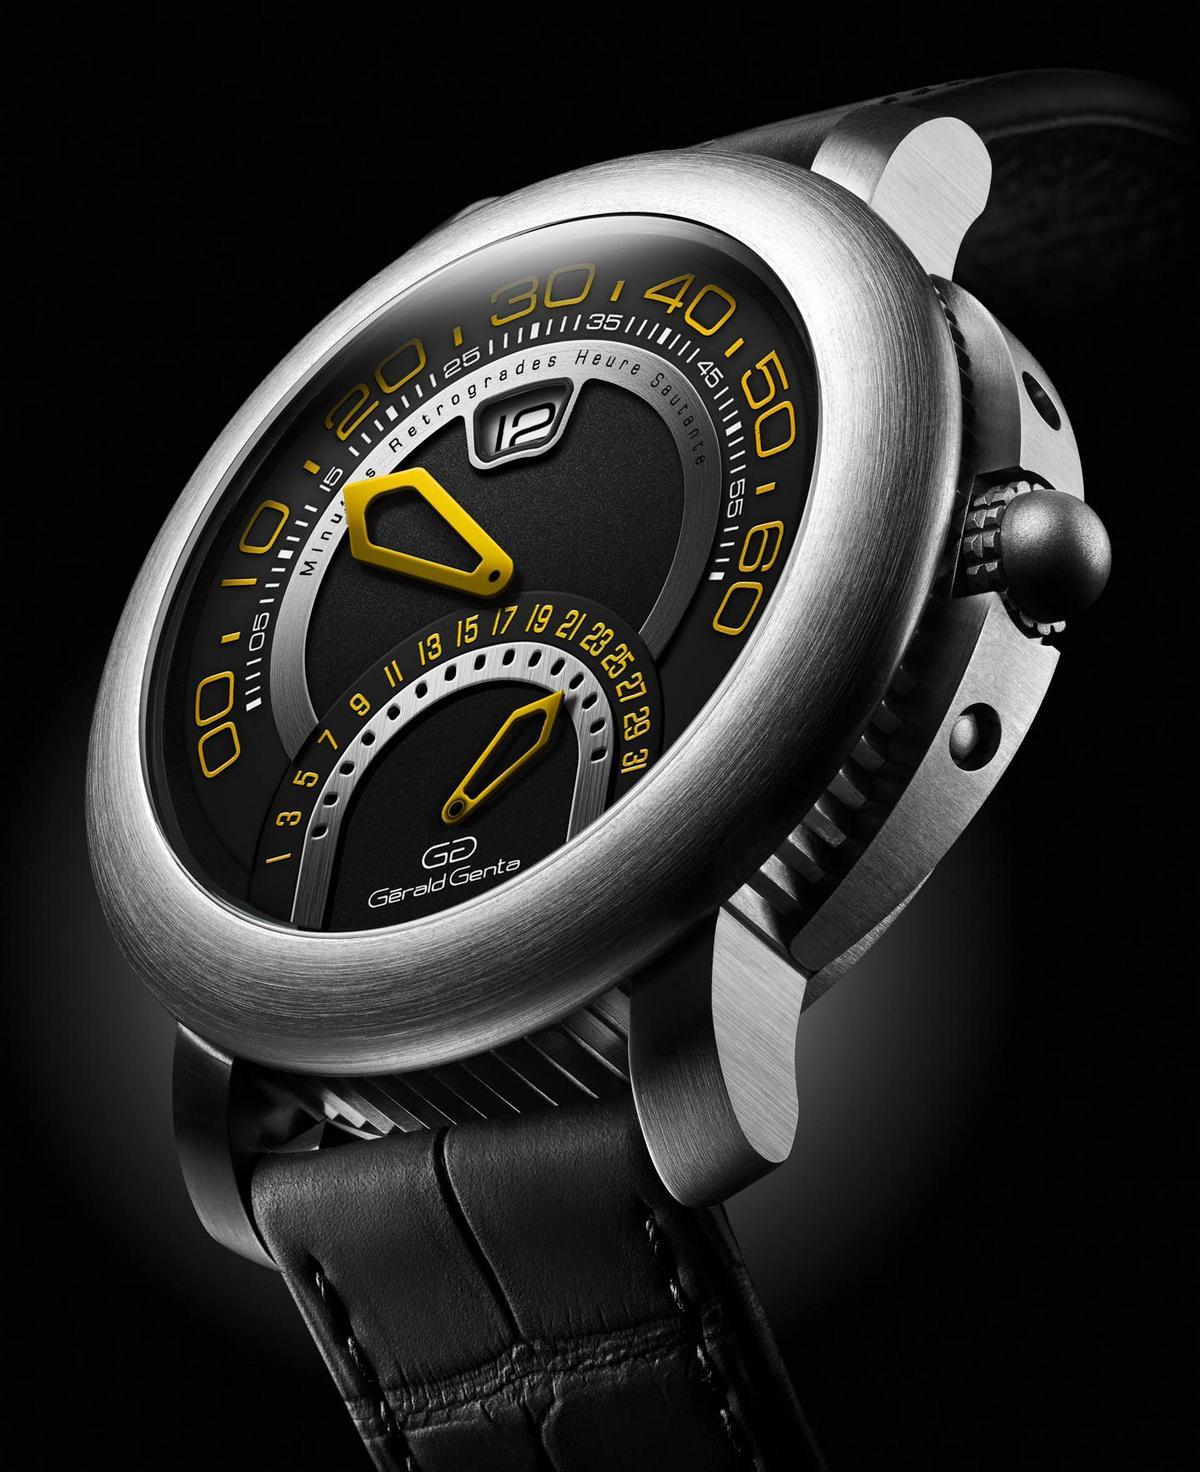 Bulgari reveals a new Gerald Genta Arena Bi-Retrograde Anthracite watch featuring a sporty update to the classic design